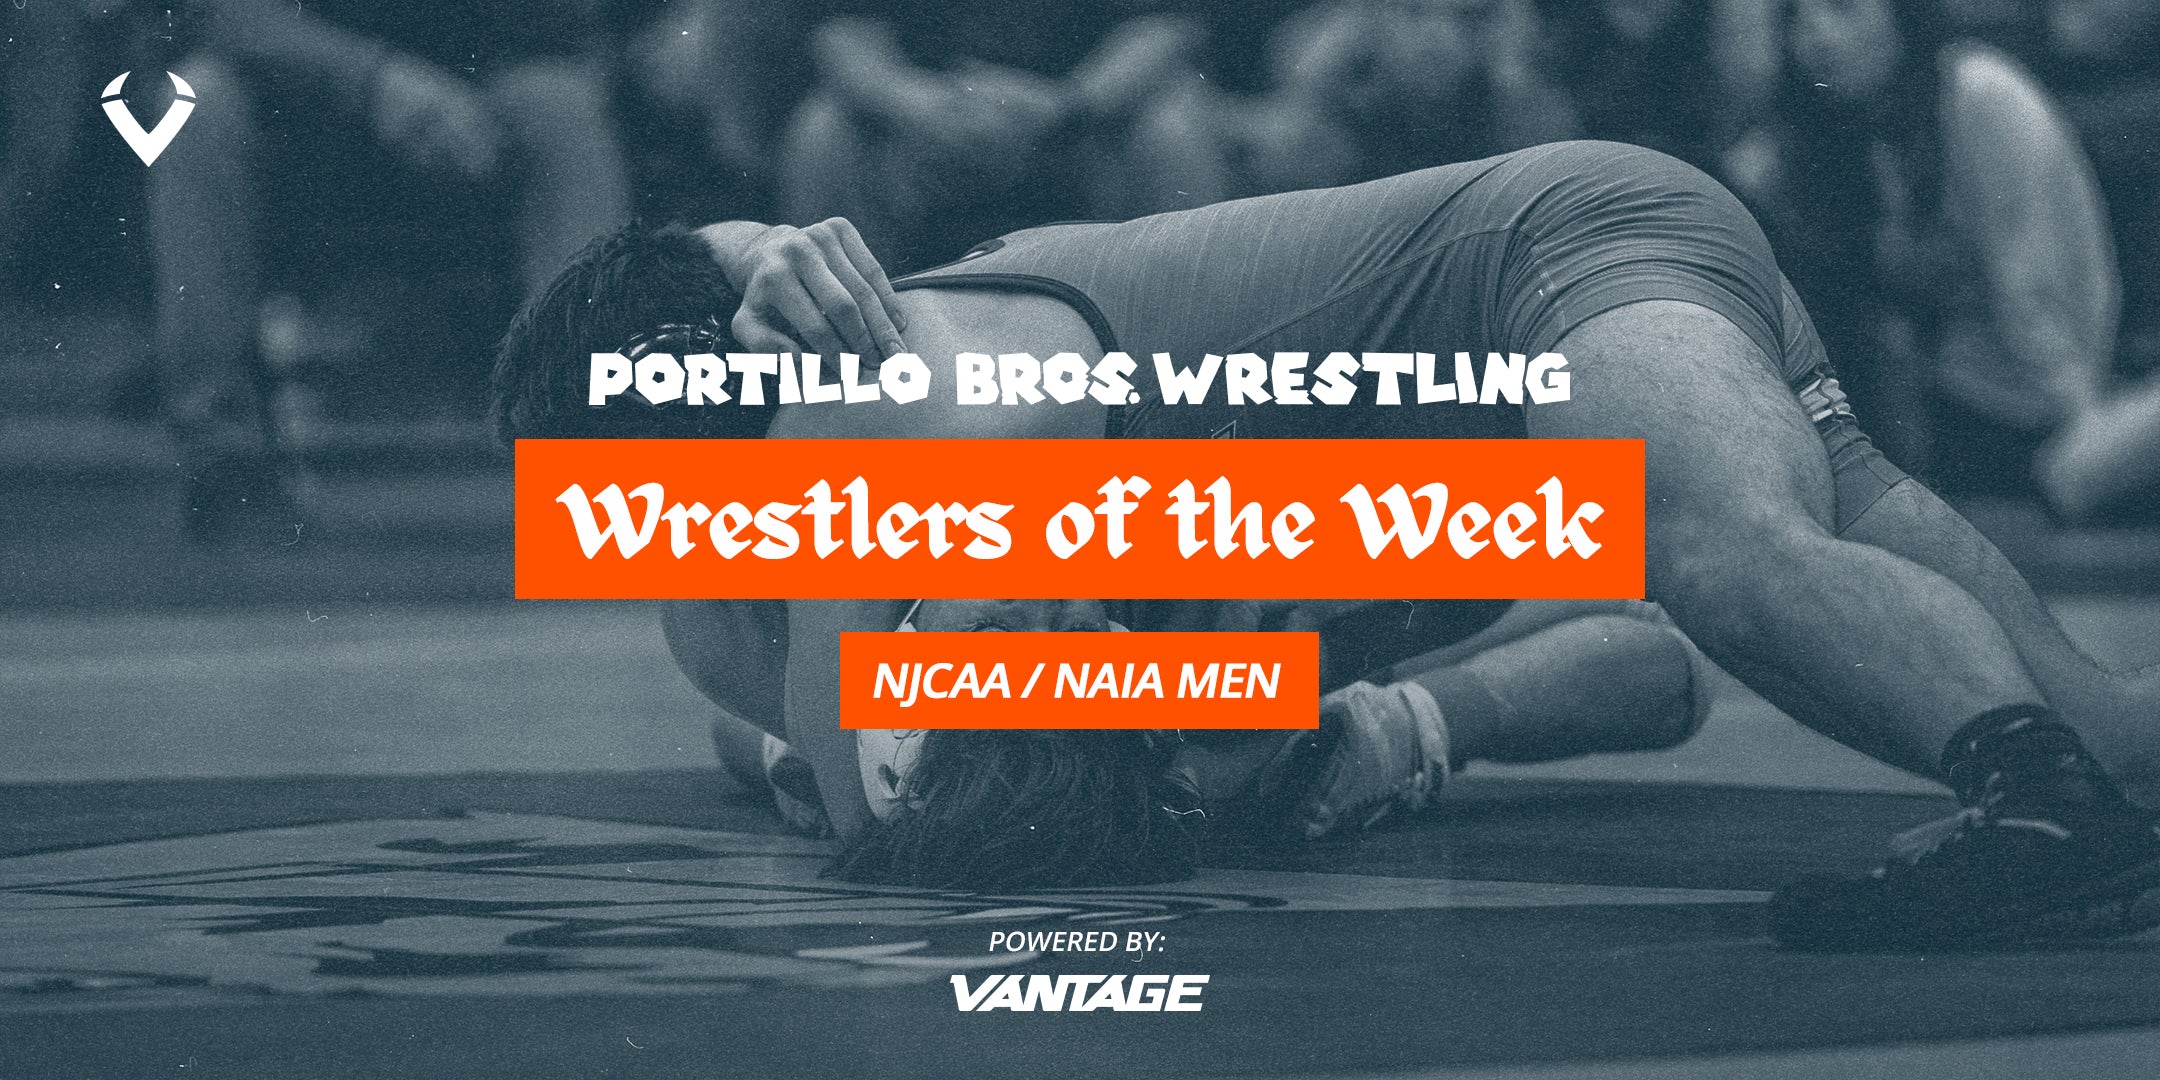 Portillo Bros Wrestling - Wrestlers of the Week (NJCAA / NAIA)